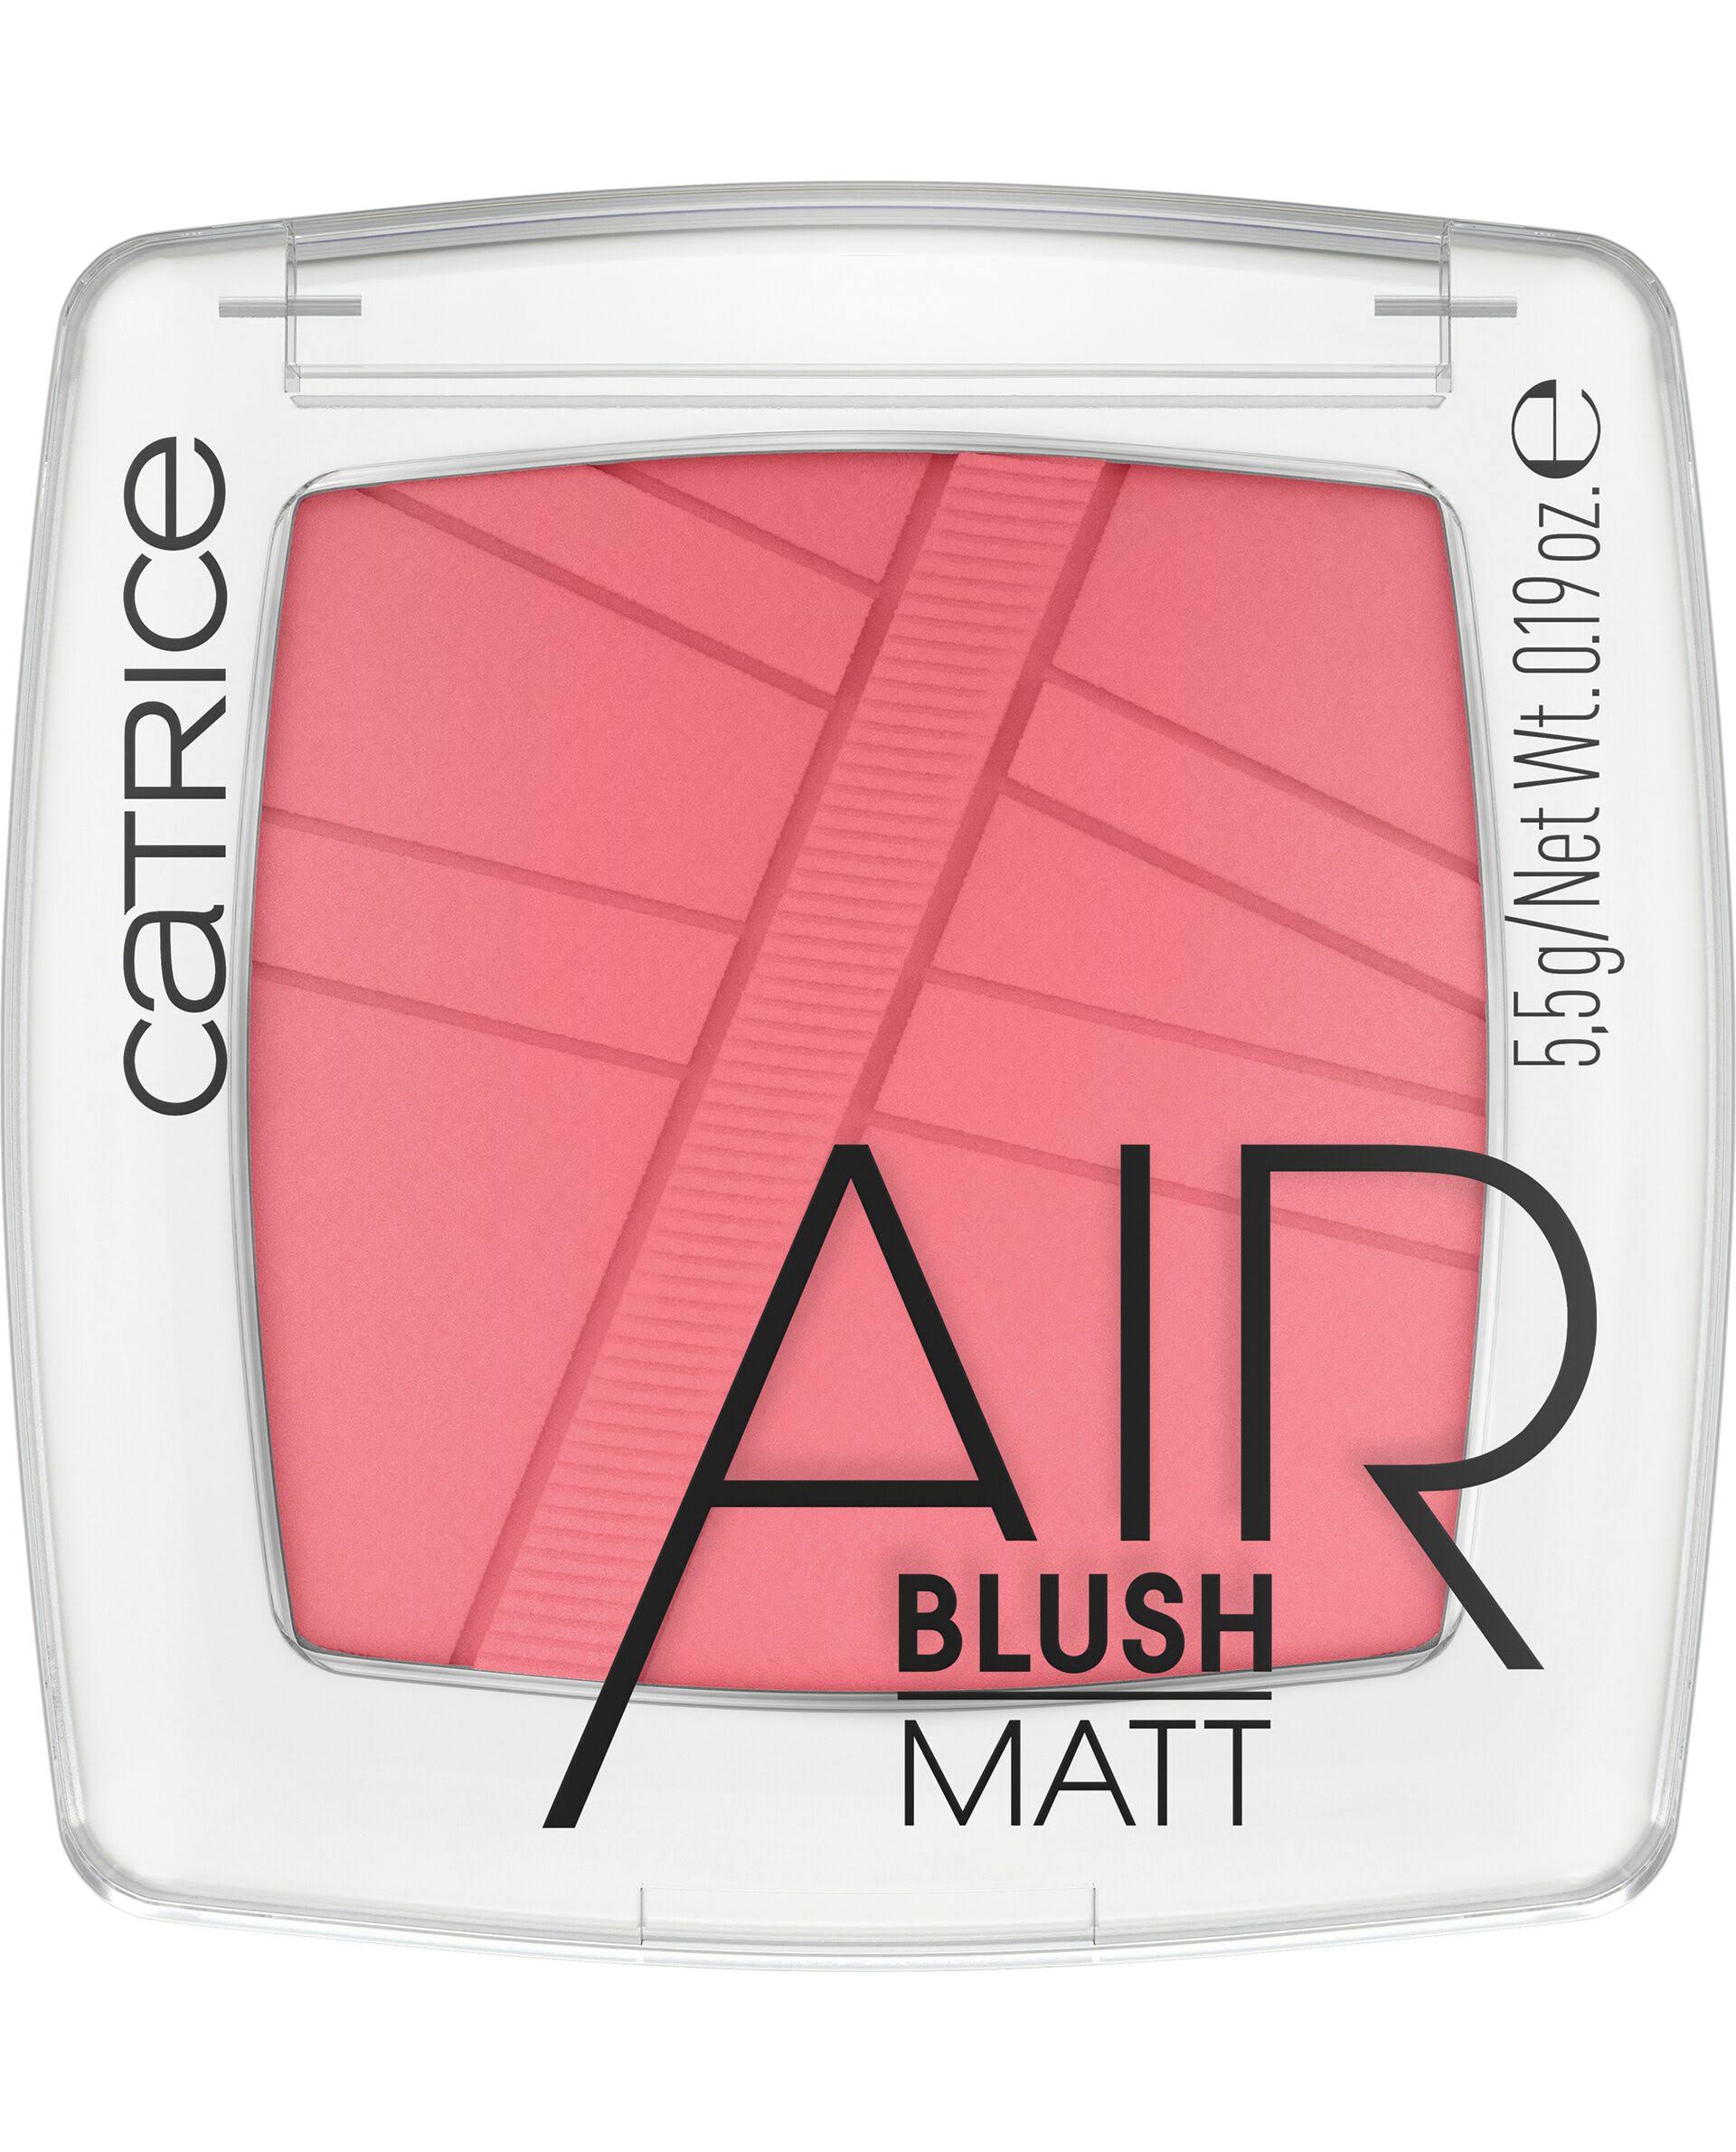 Blush Catrice Air Blush Glow 120-berry breeze (5,5 g)